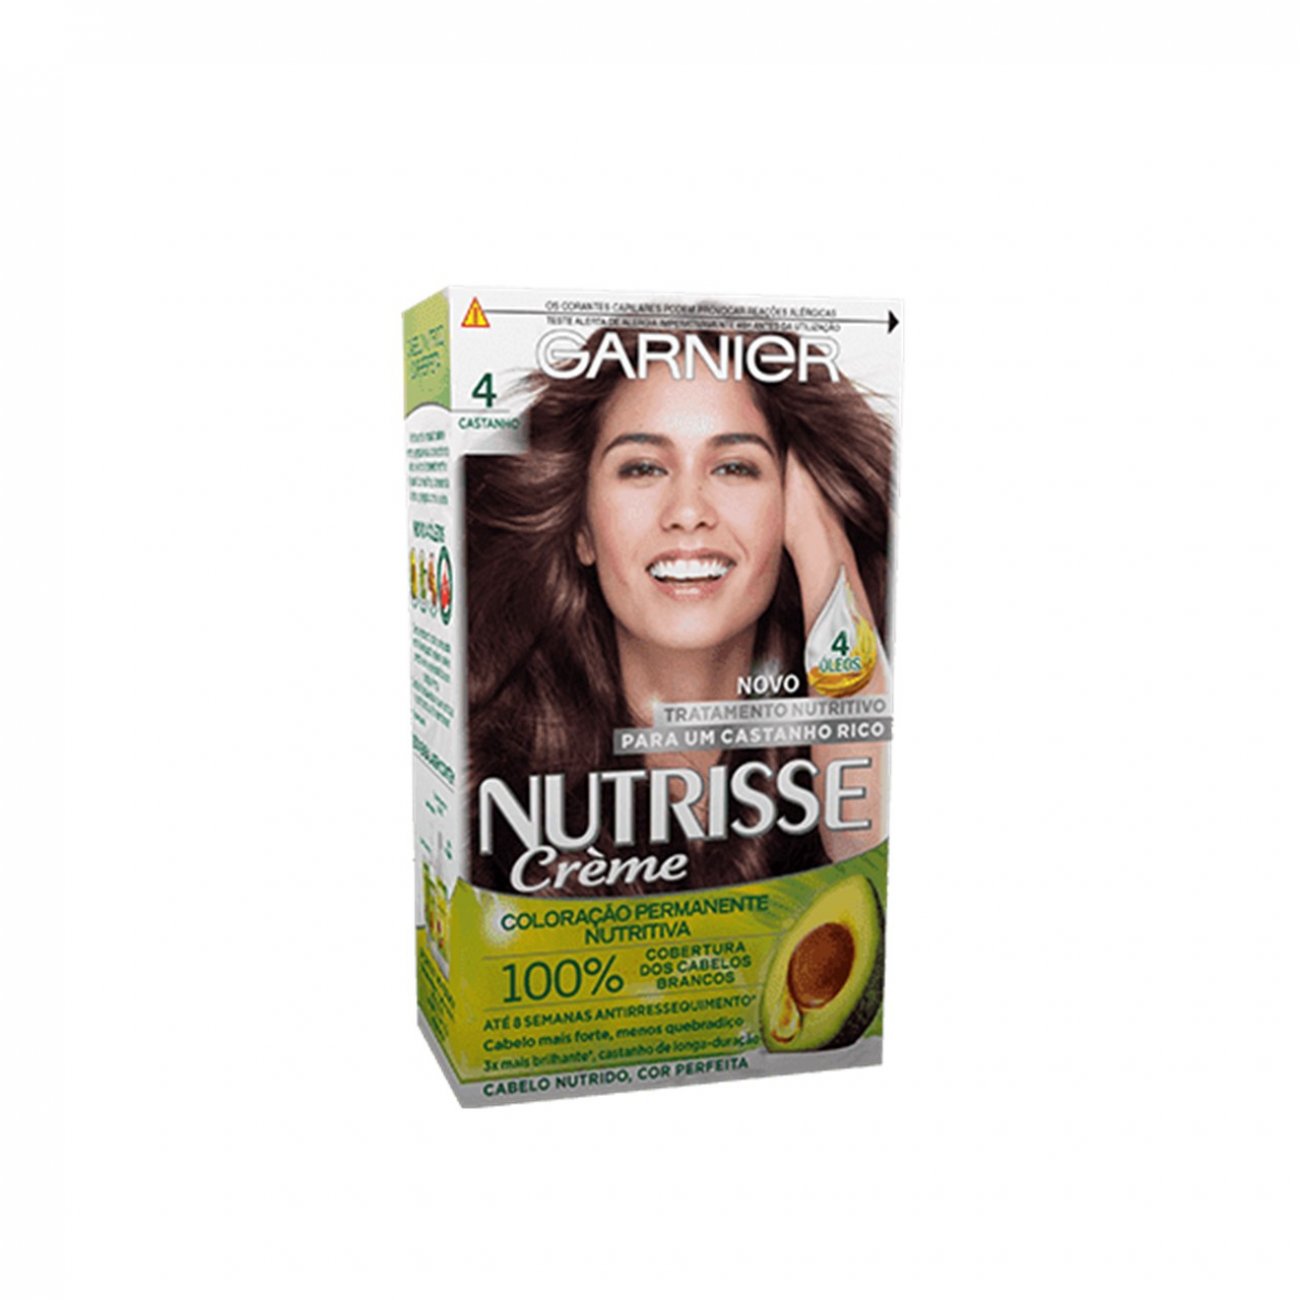 Buy Garnier Nutrisse Crème 4 Dark Brown Permanent Hair Dye · Costa Rica